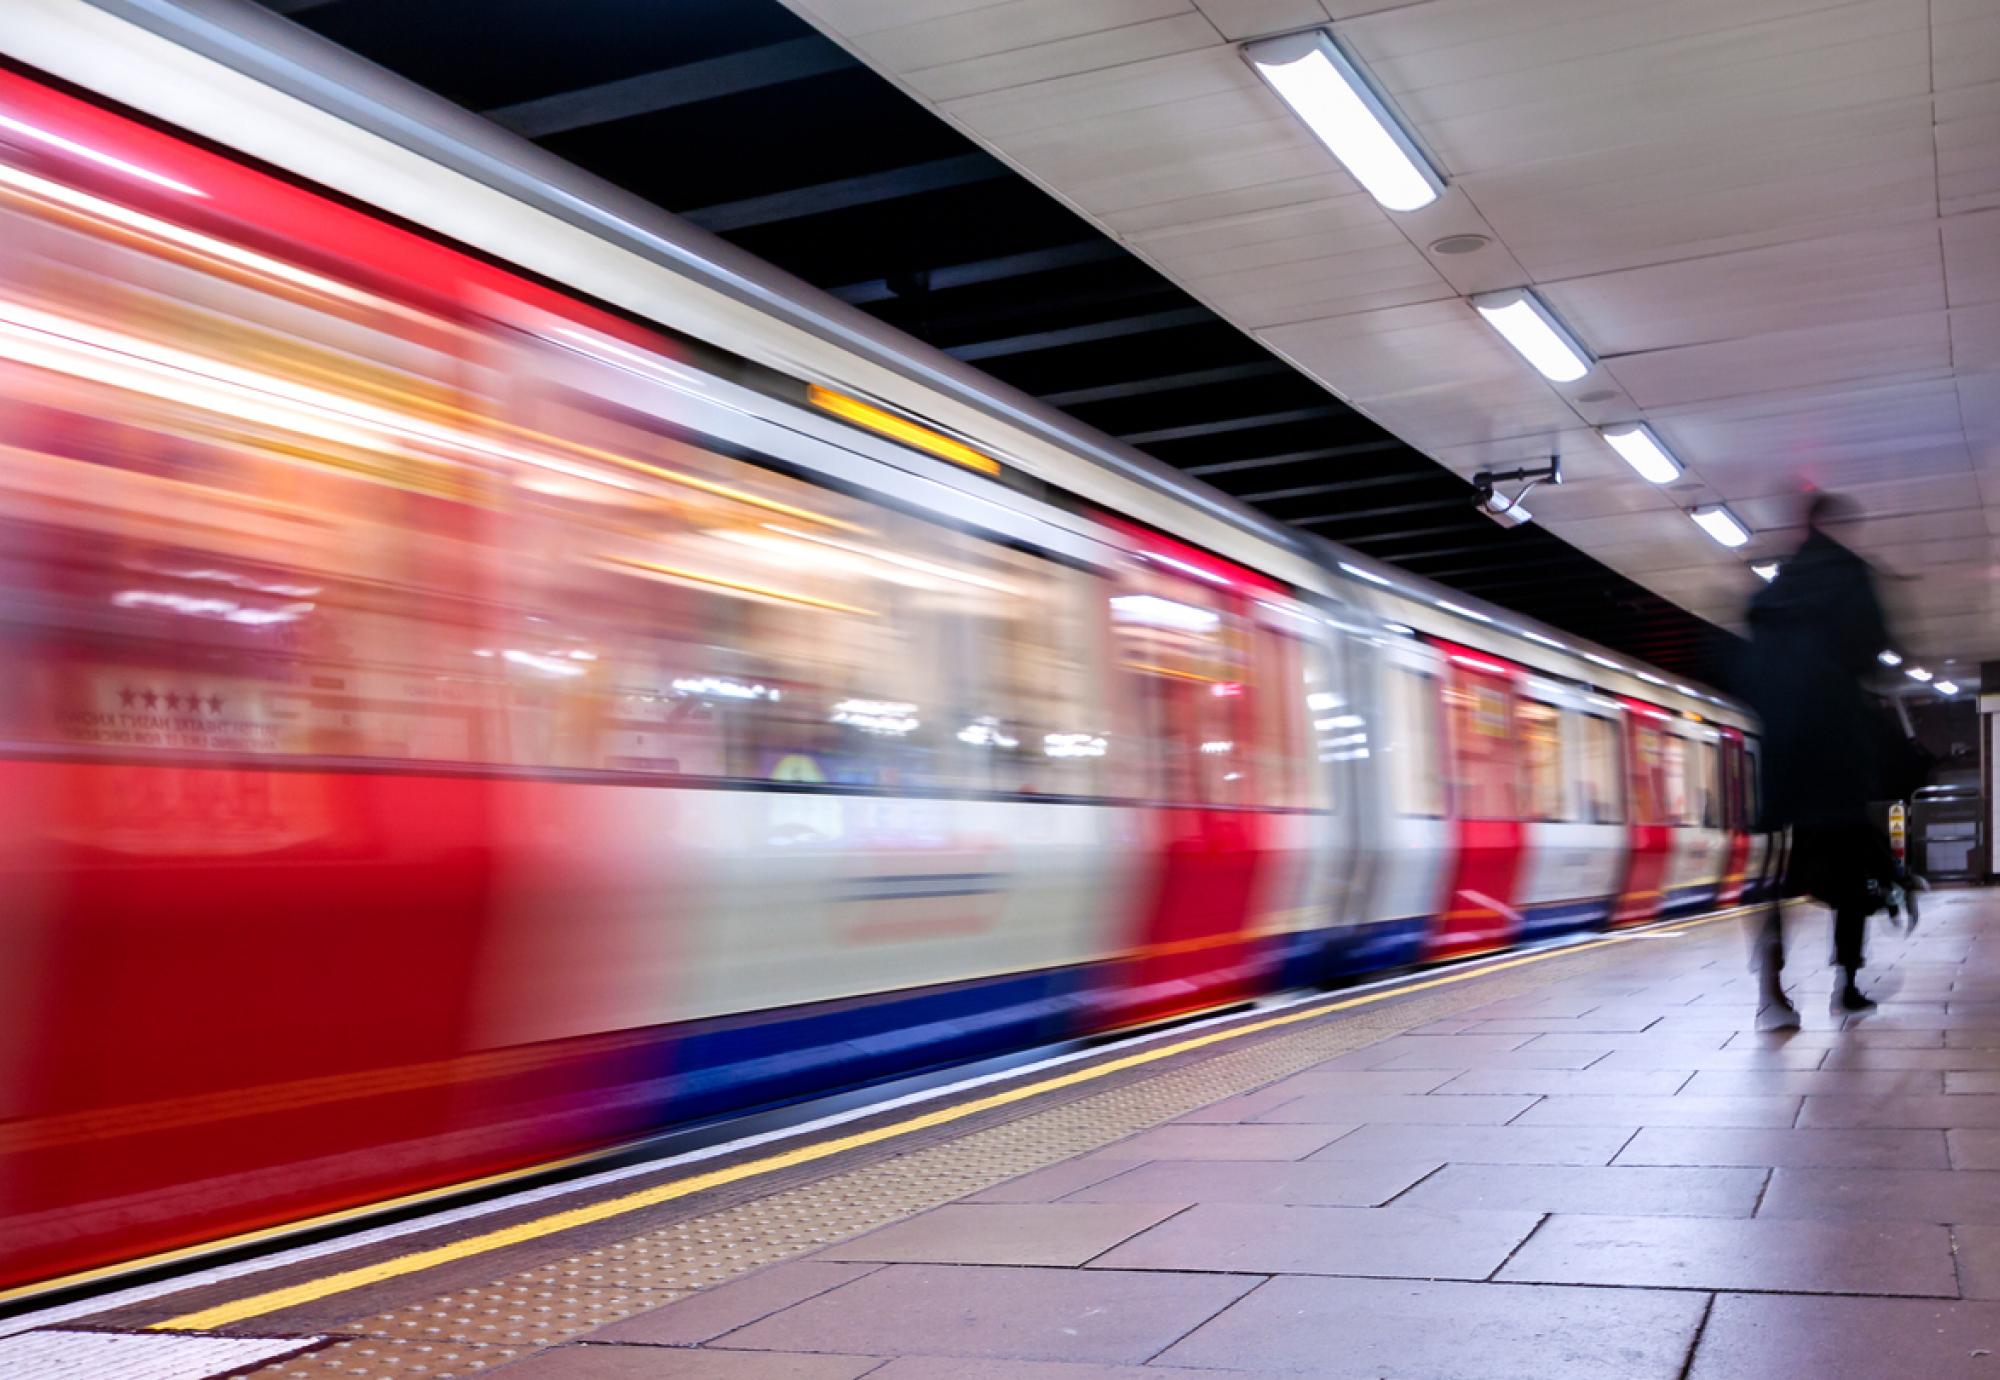 London's Tube Set for Upgrades Despite Funding Hurdles